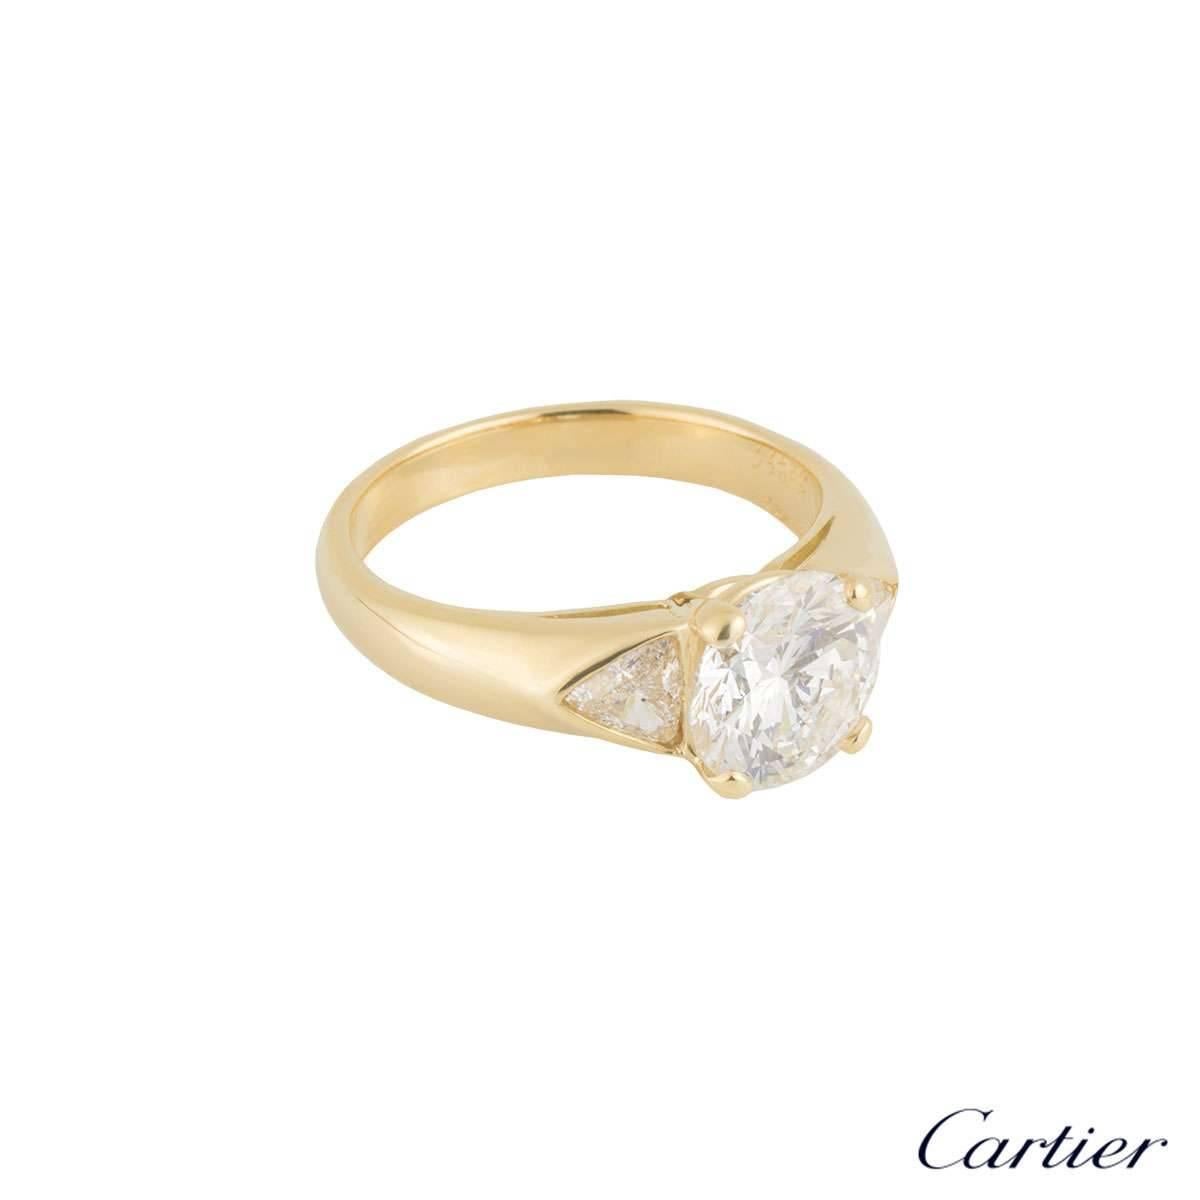 2 carat cartier diamond ring